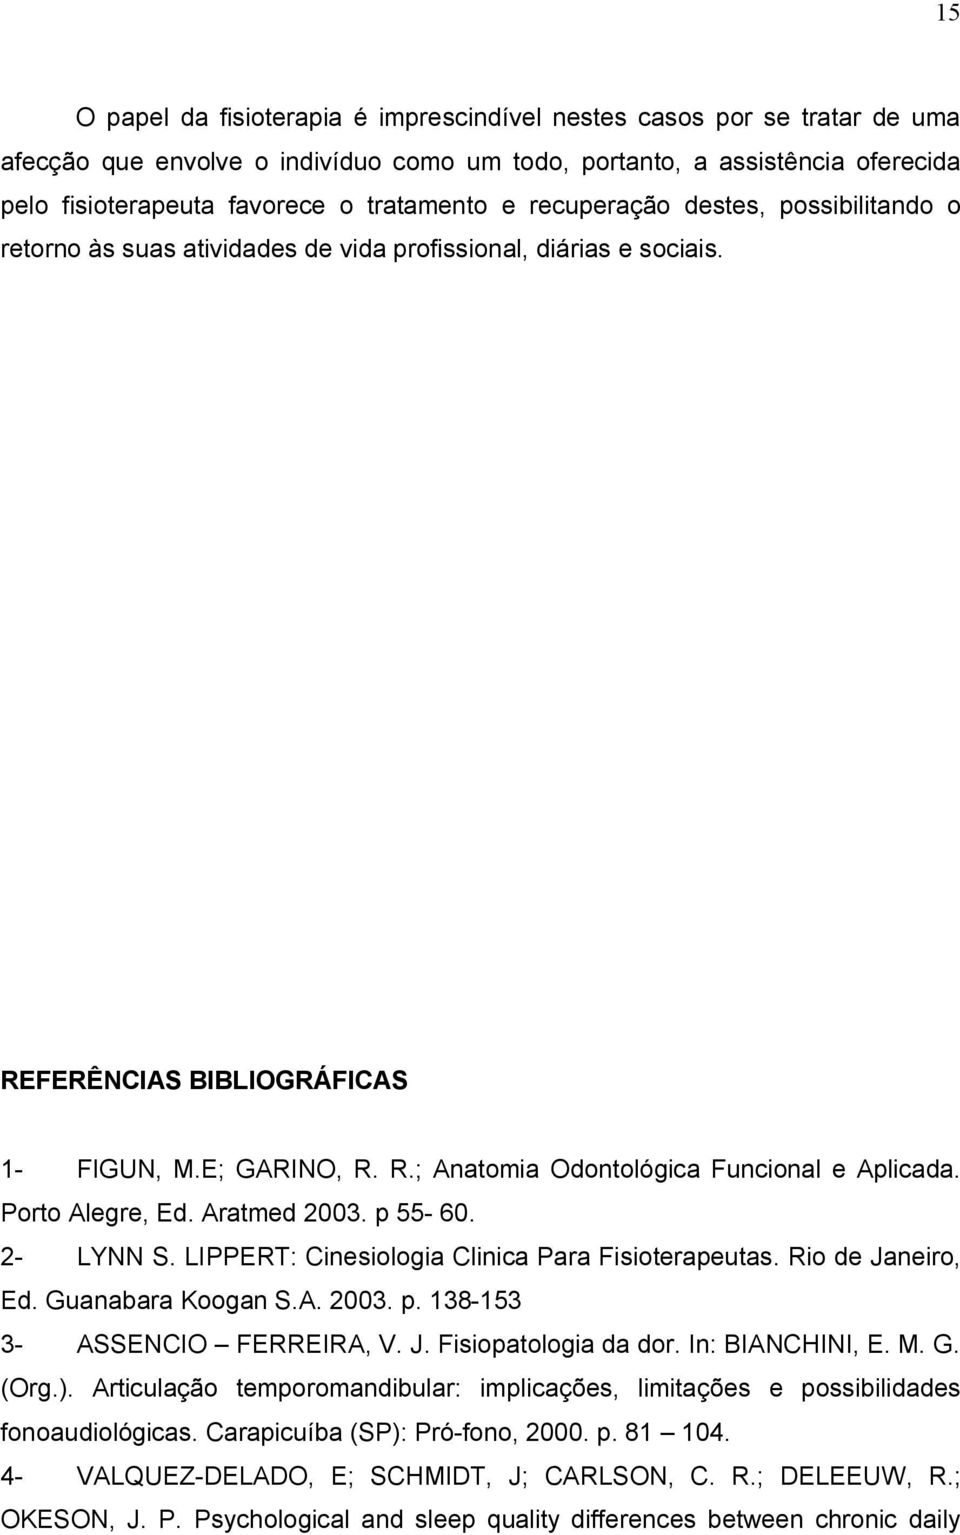 Porto Alegre, Ed. Aratmed 2003. p 55-60. 2- LYNN S. LIPPERT: Cinesiologia Clinica Para Fisioterapeutas. Rio de Janeiro, Ed. Guanabara Koogan S.A. 2003. p. 138-153 3- ASSENCIO FERREIRA, V. J. Fisiopatologia da dor.